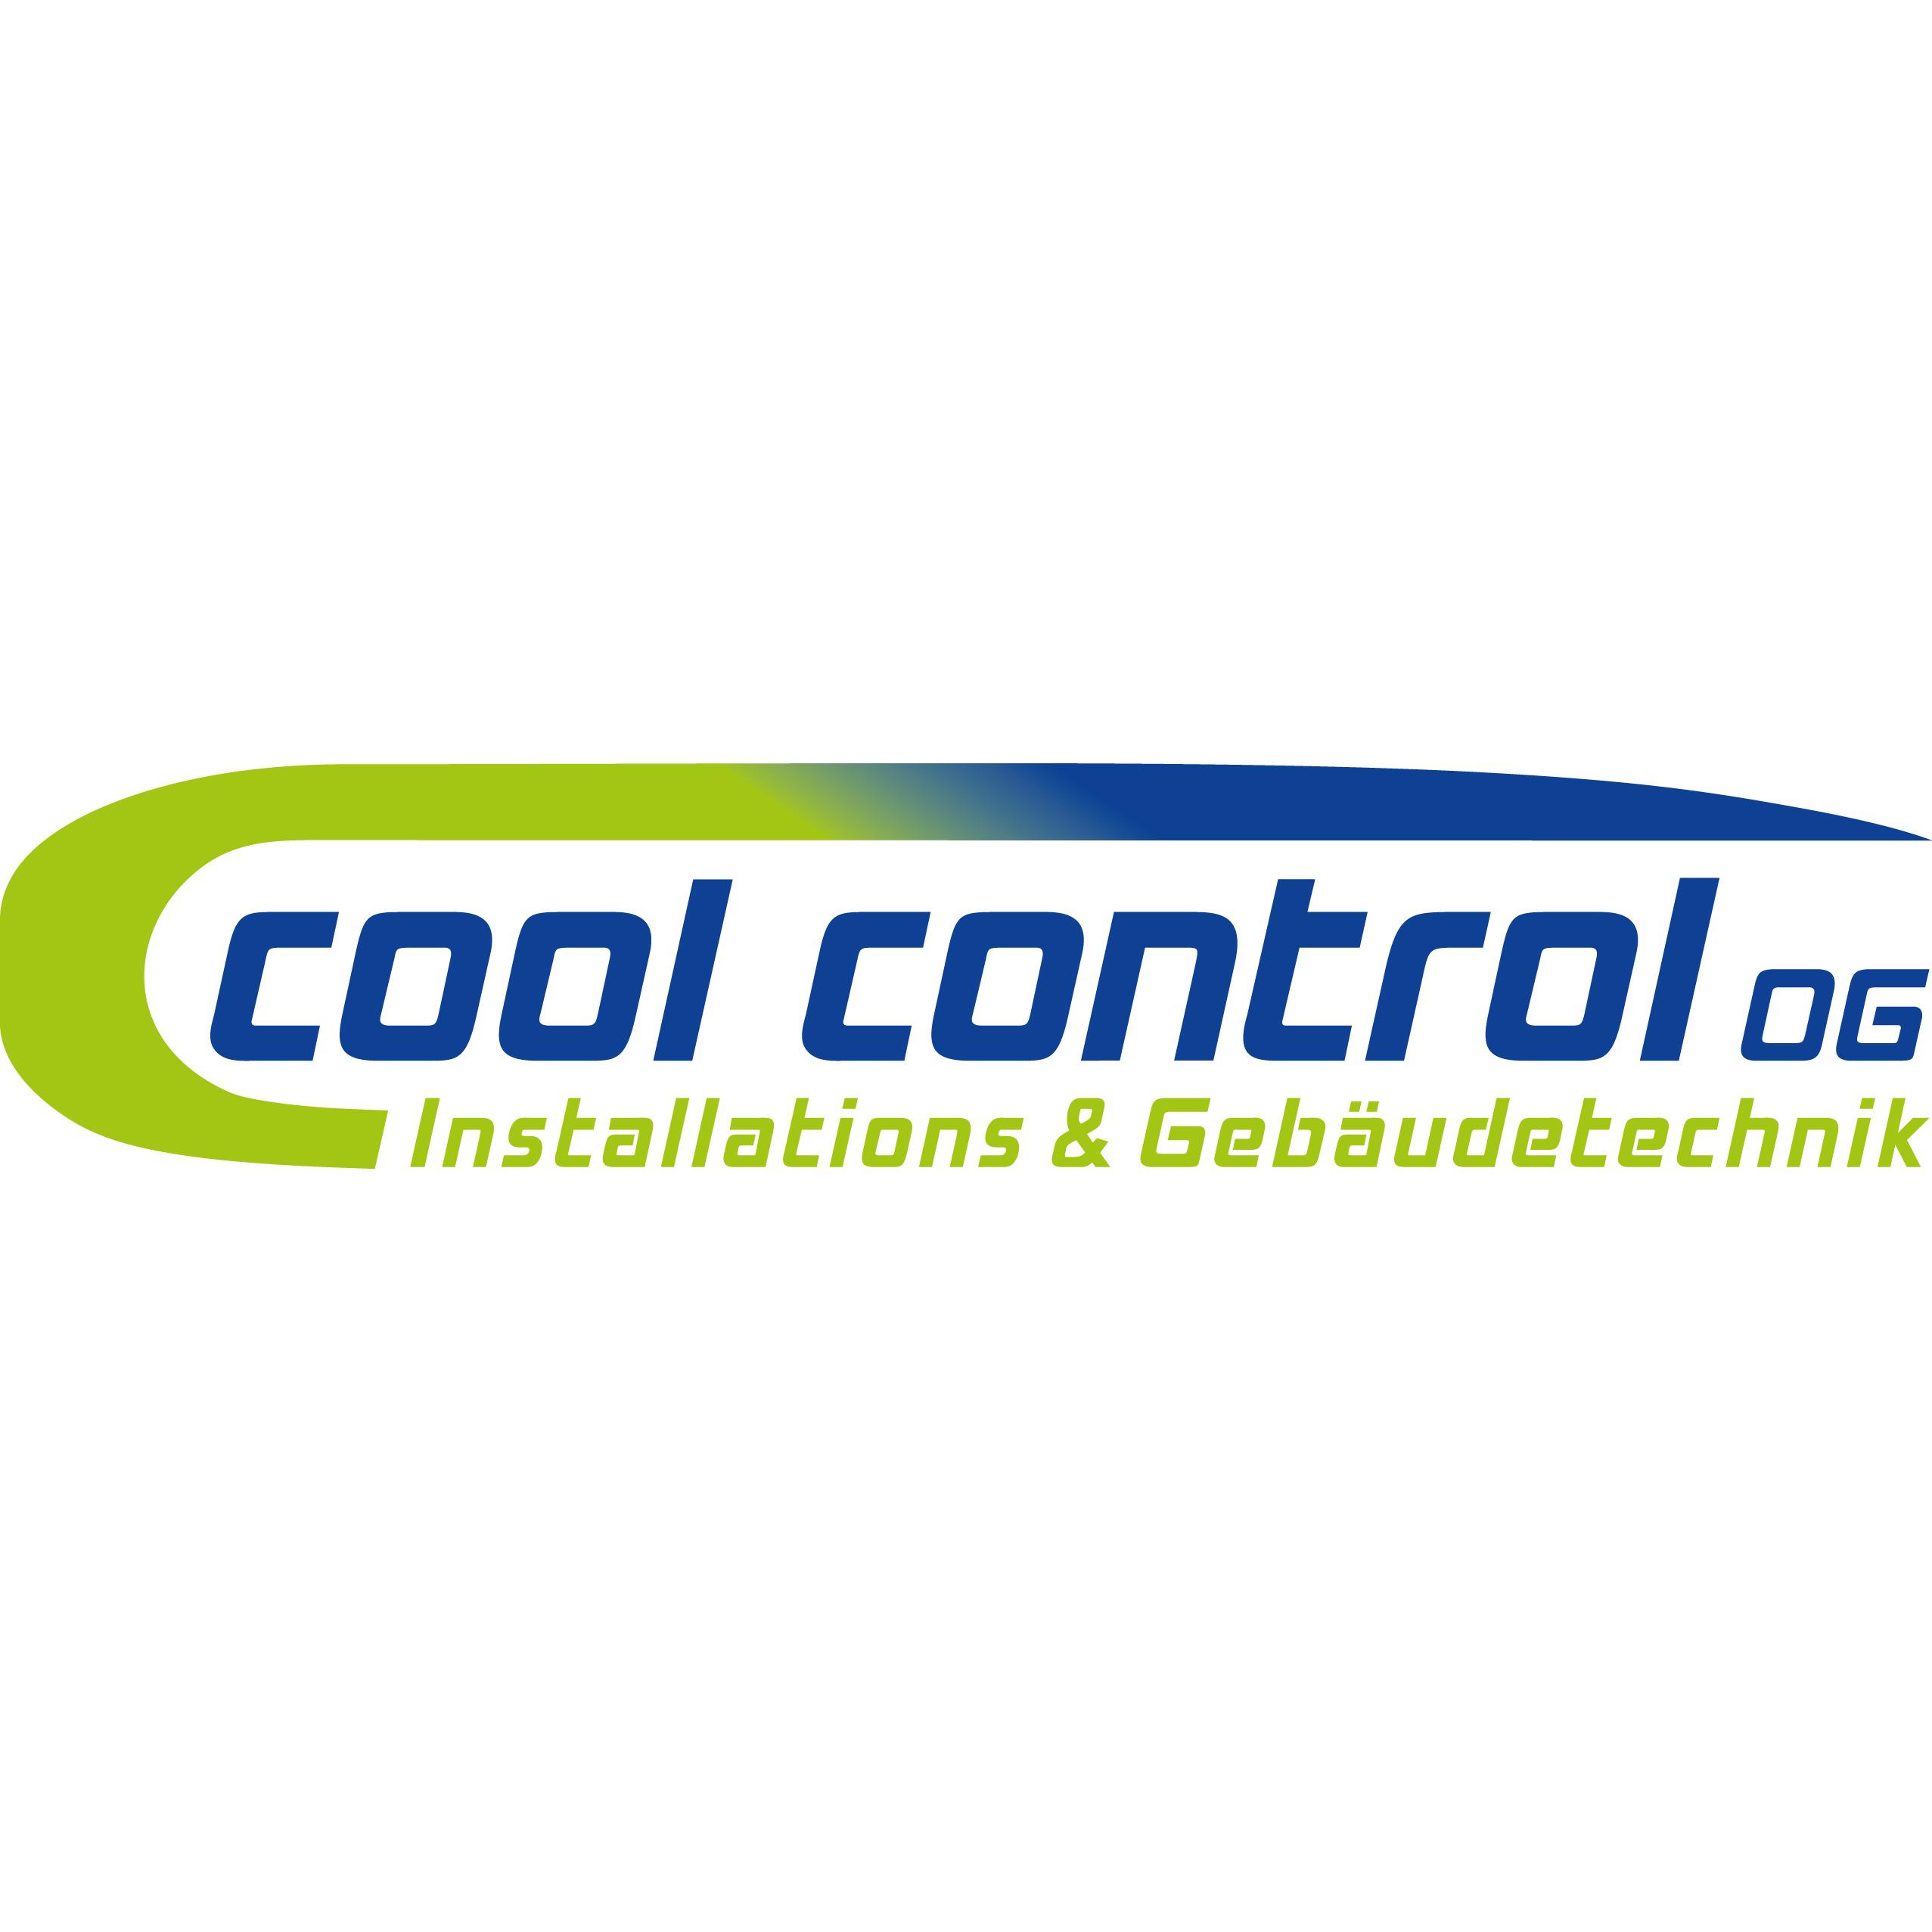 Cool Control OG Installations & Gebäudetechnik Logo